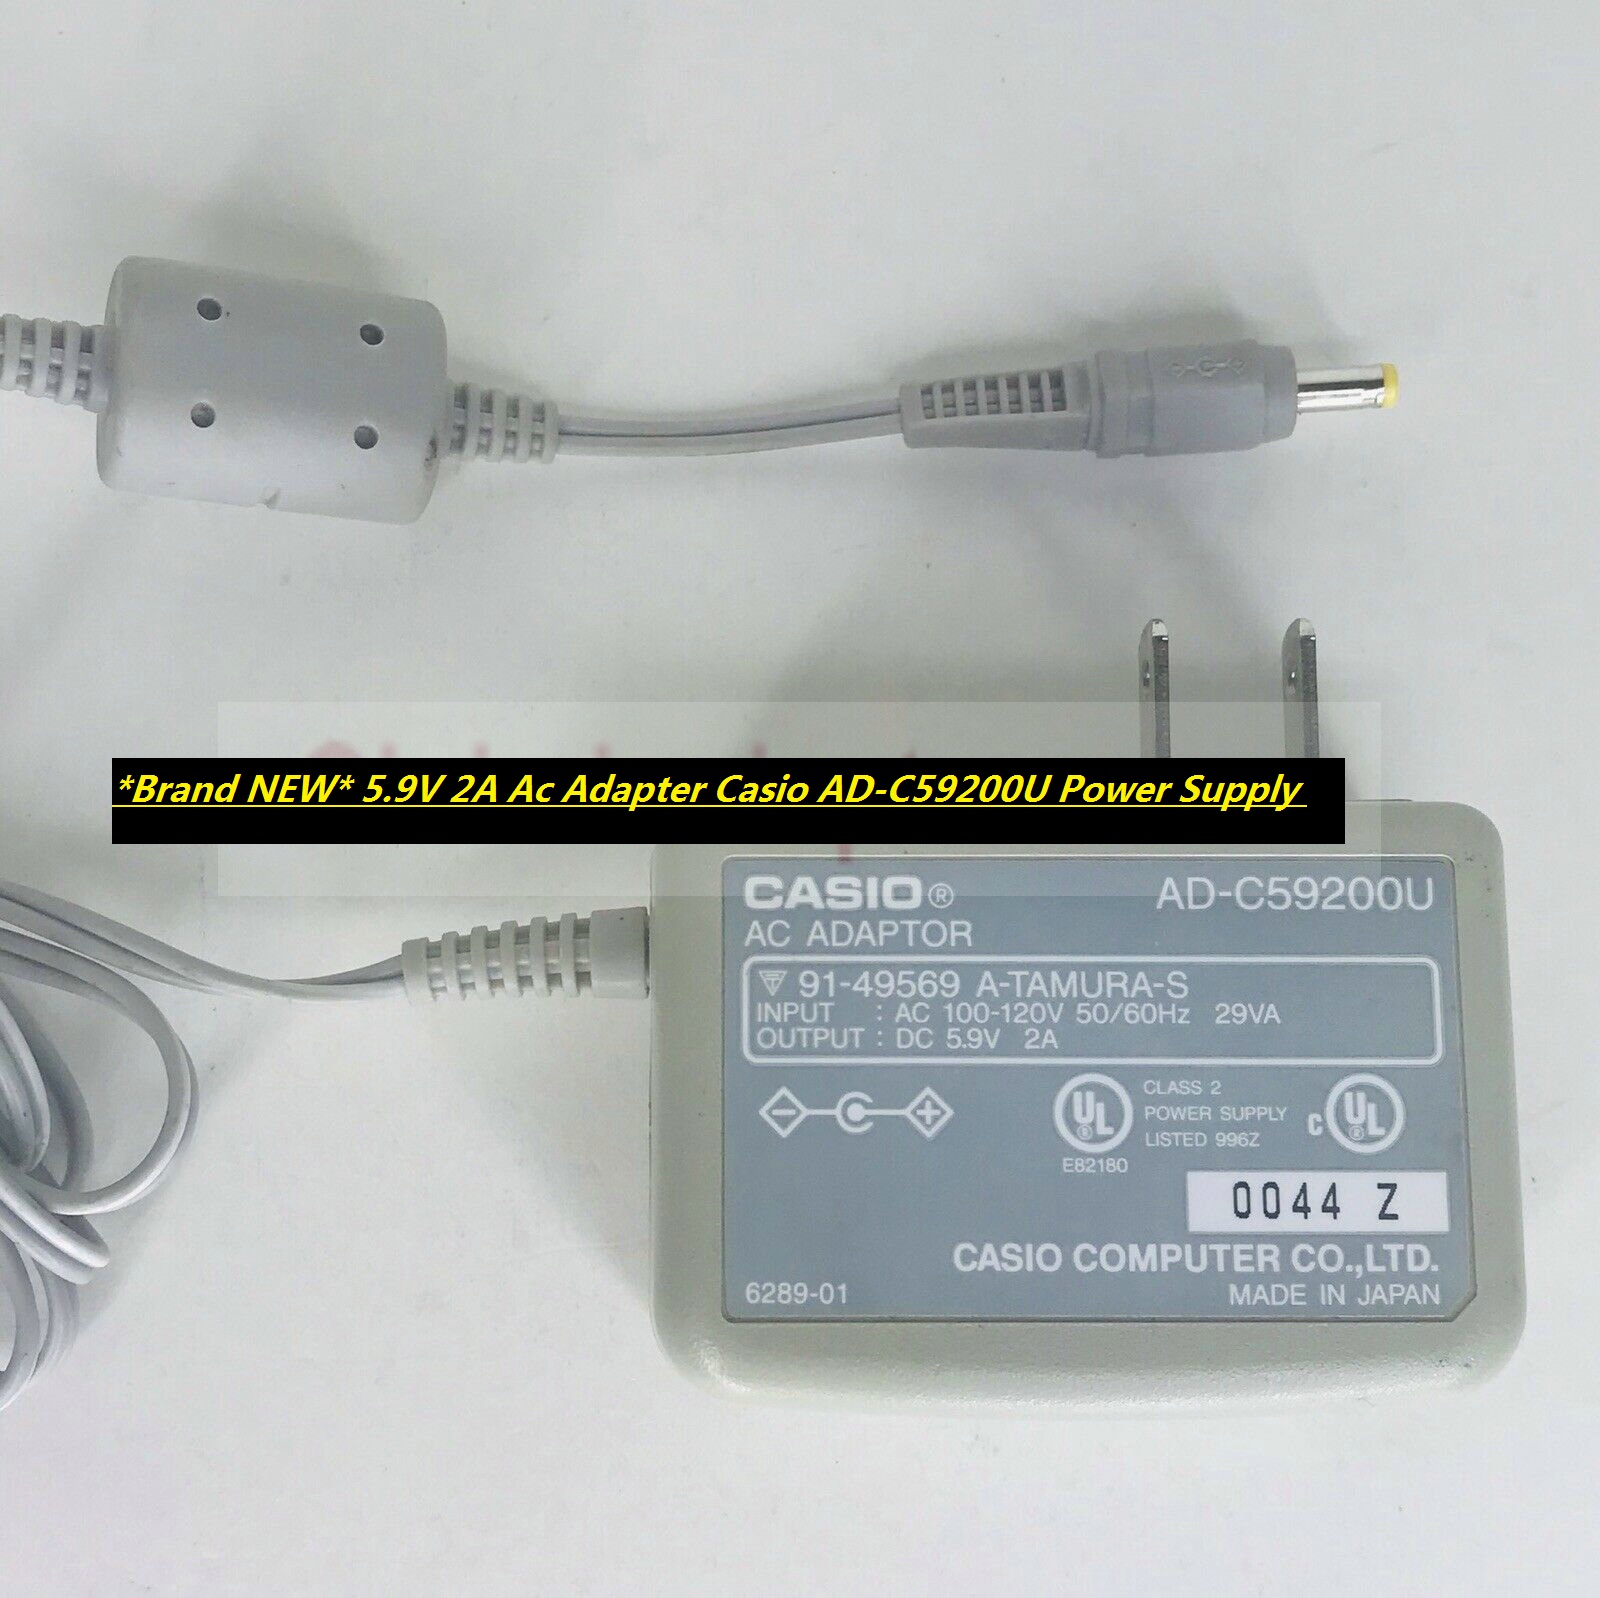 *Brand NEW* 5.9V 2A Ac Adapter Casio AD-C59200U Power Supply - Click Image to Close